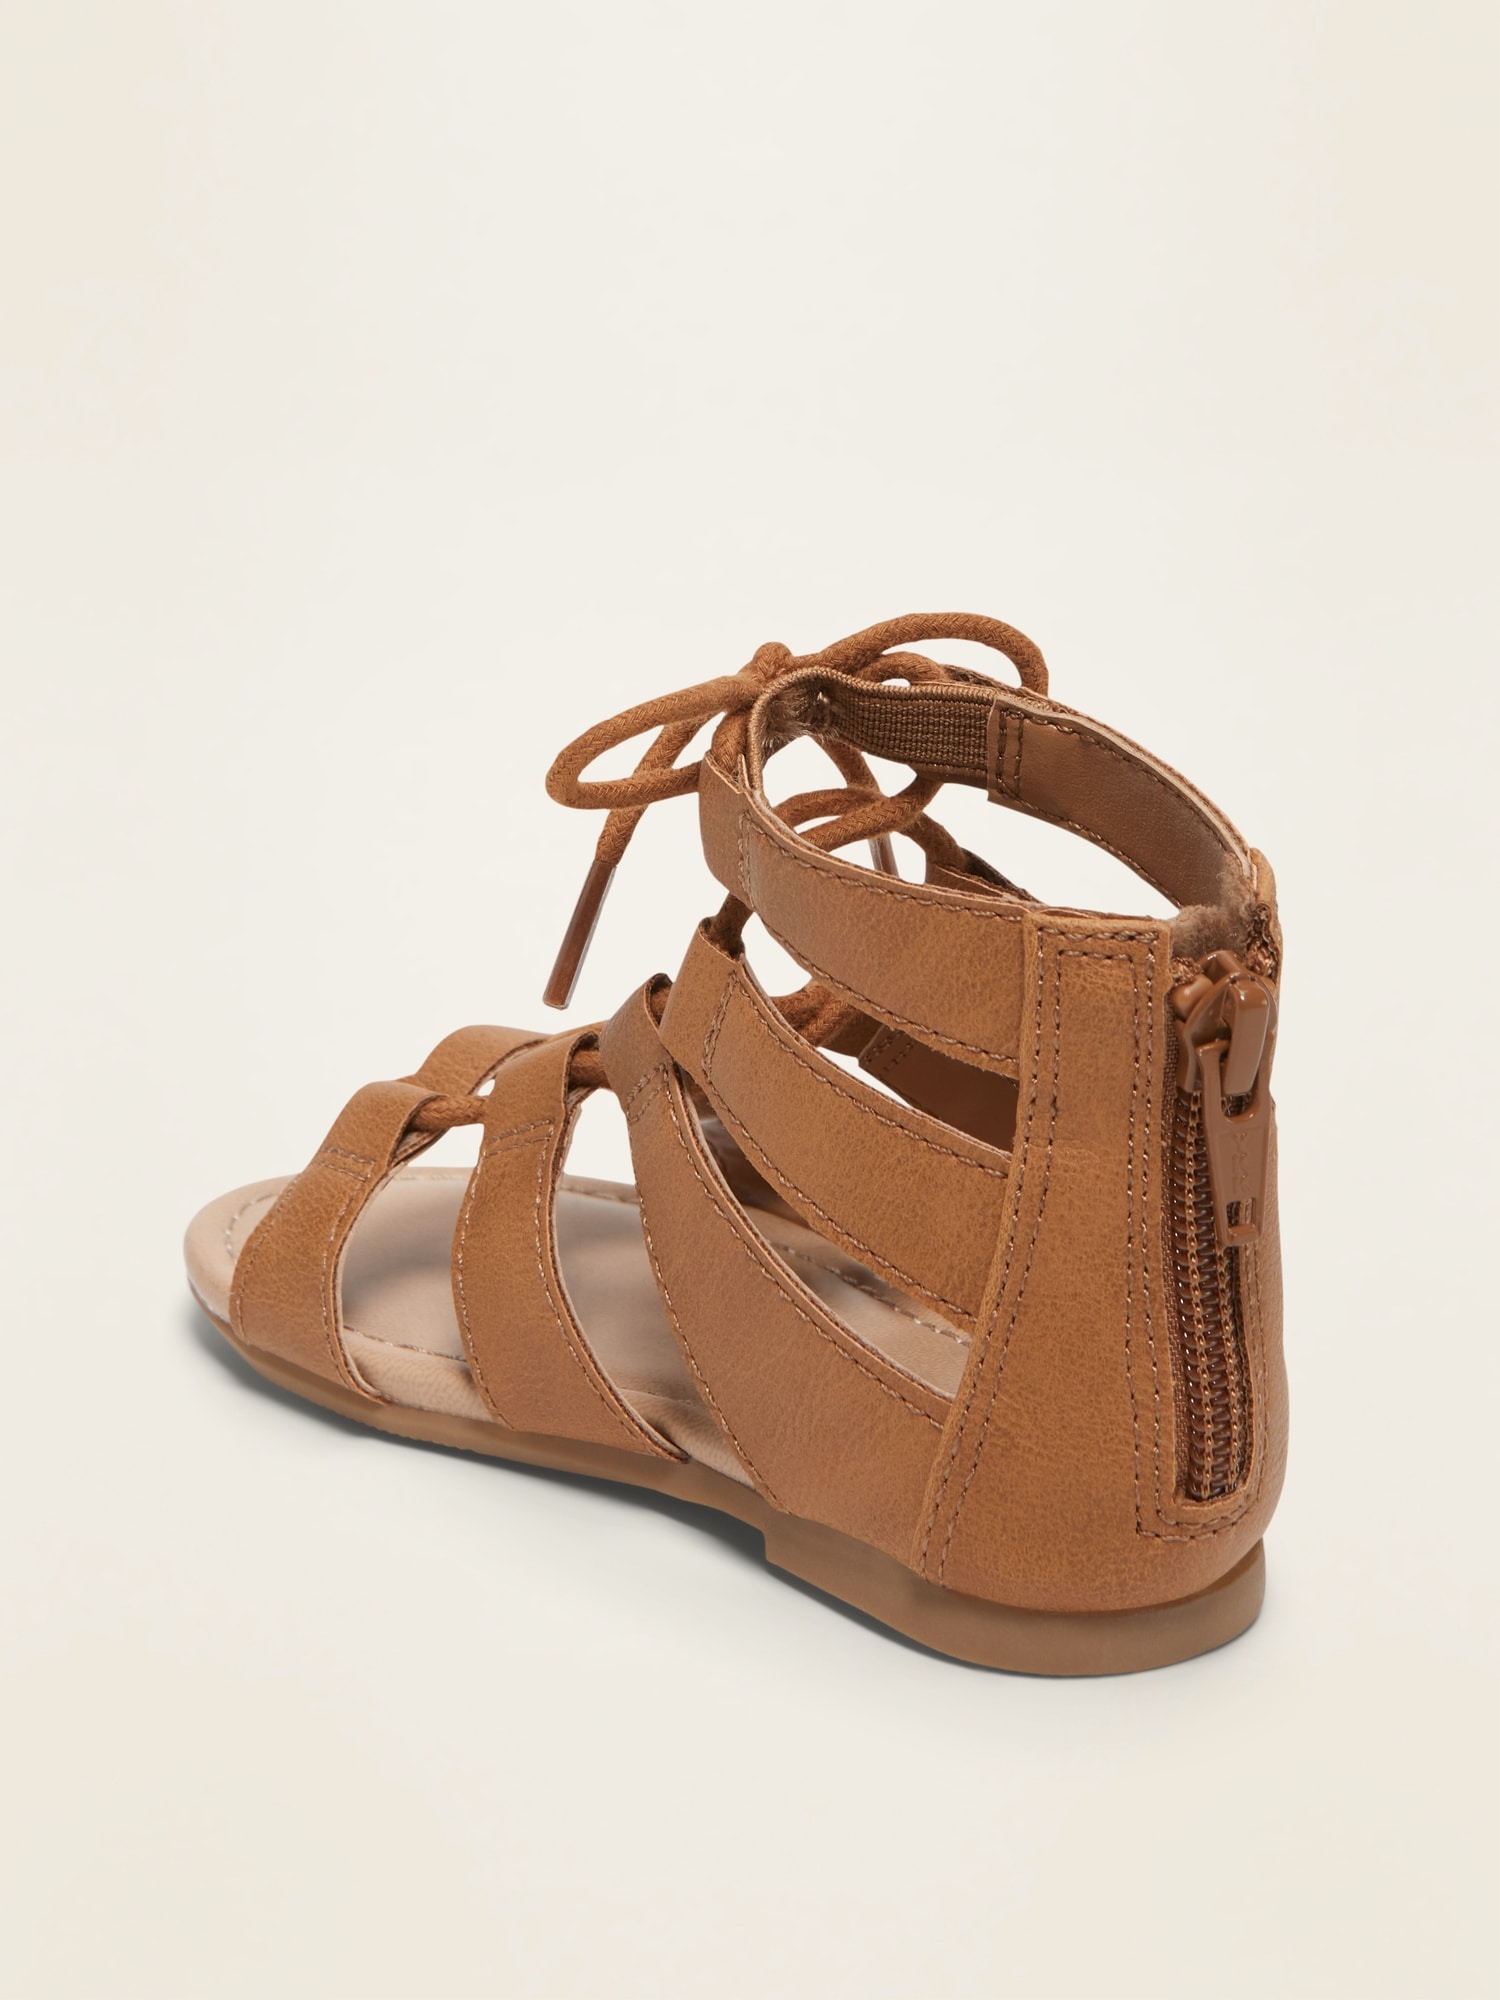 Toddler Girls Size 5 US Brown Beige Gladiator Sandals Shoes GAP Baby